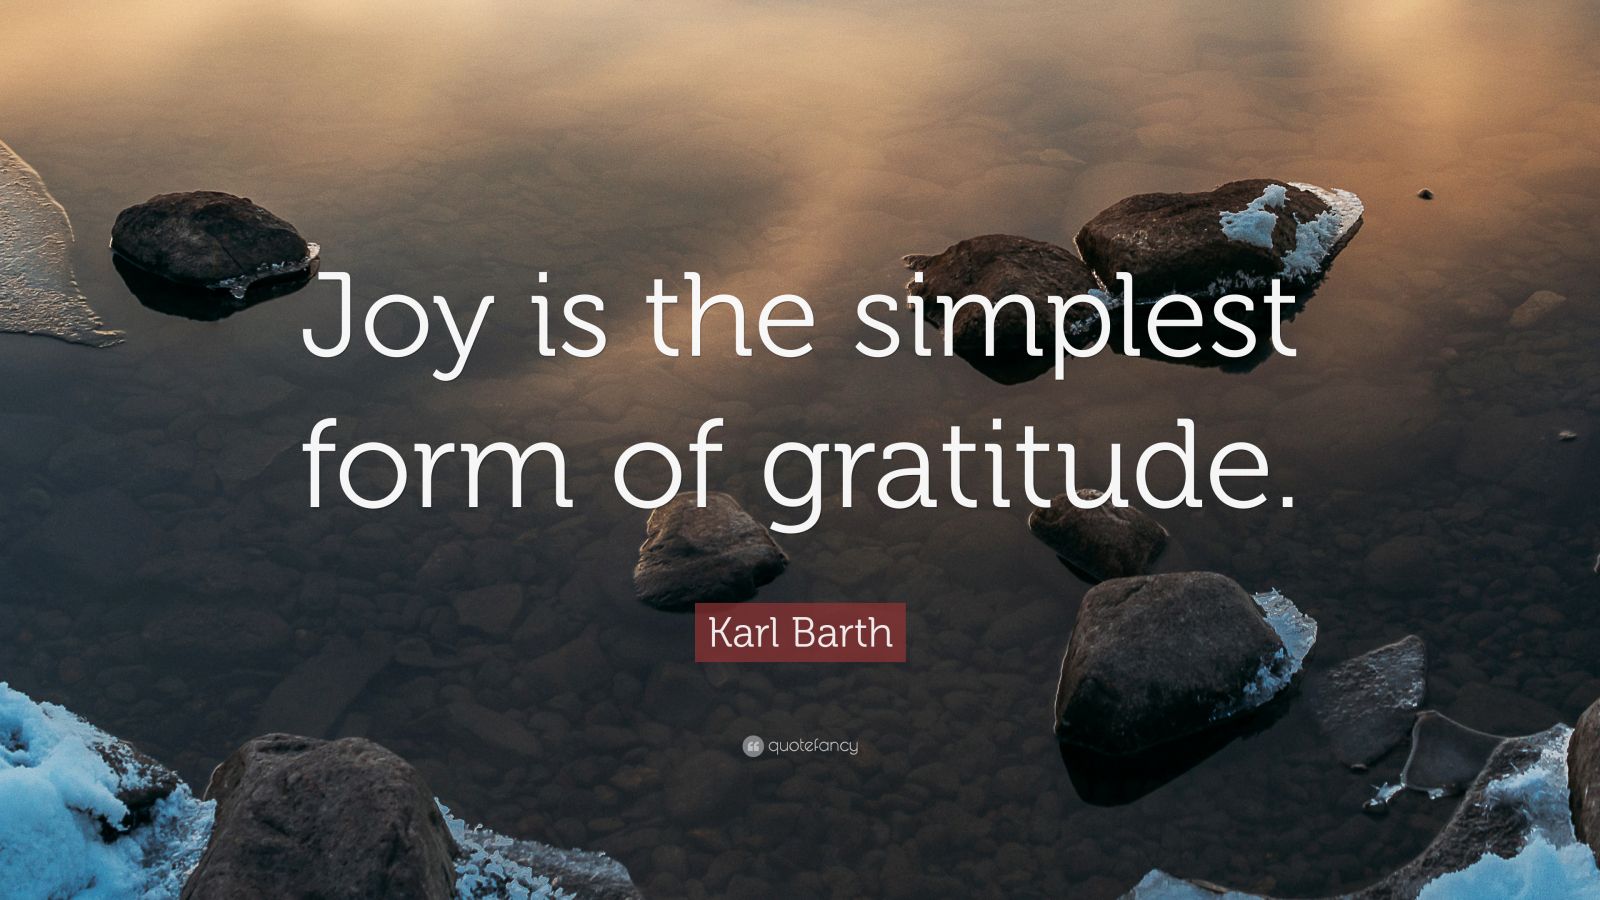 joy is the simplest form of gratitude essay upsc